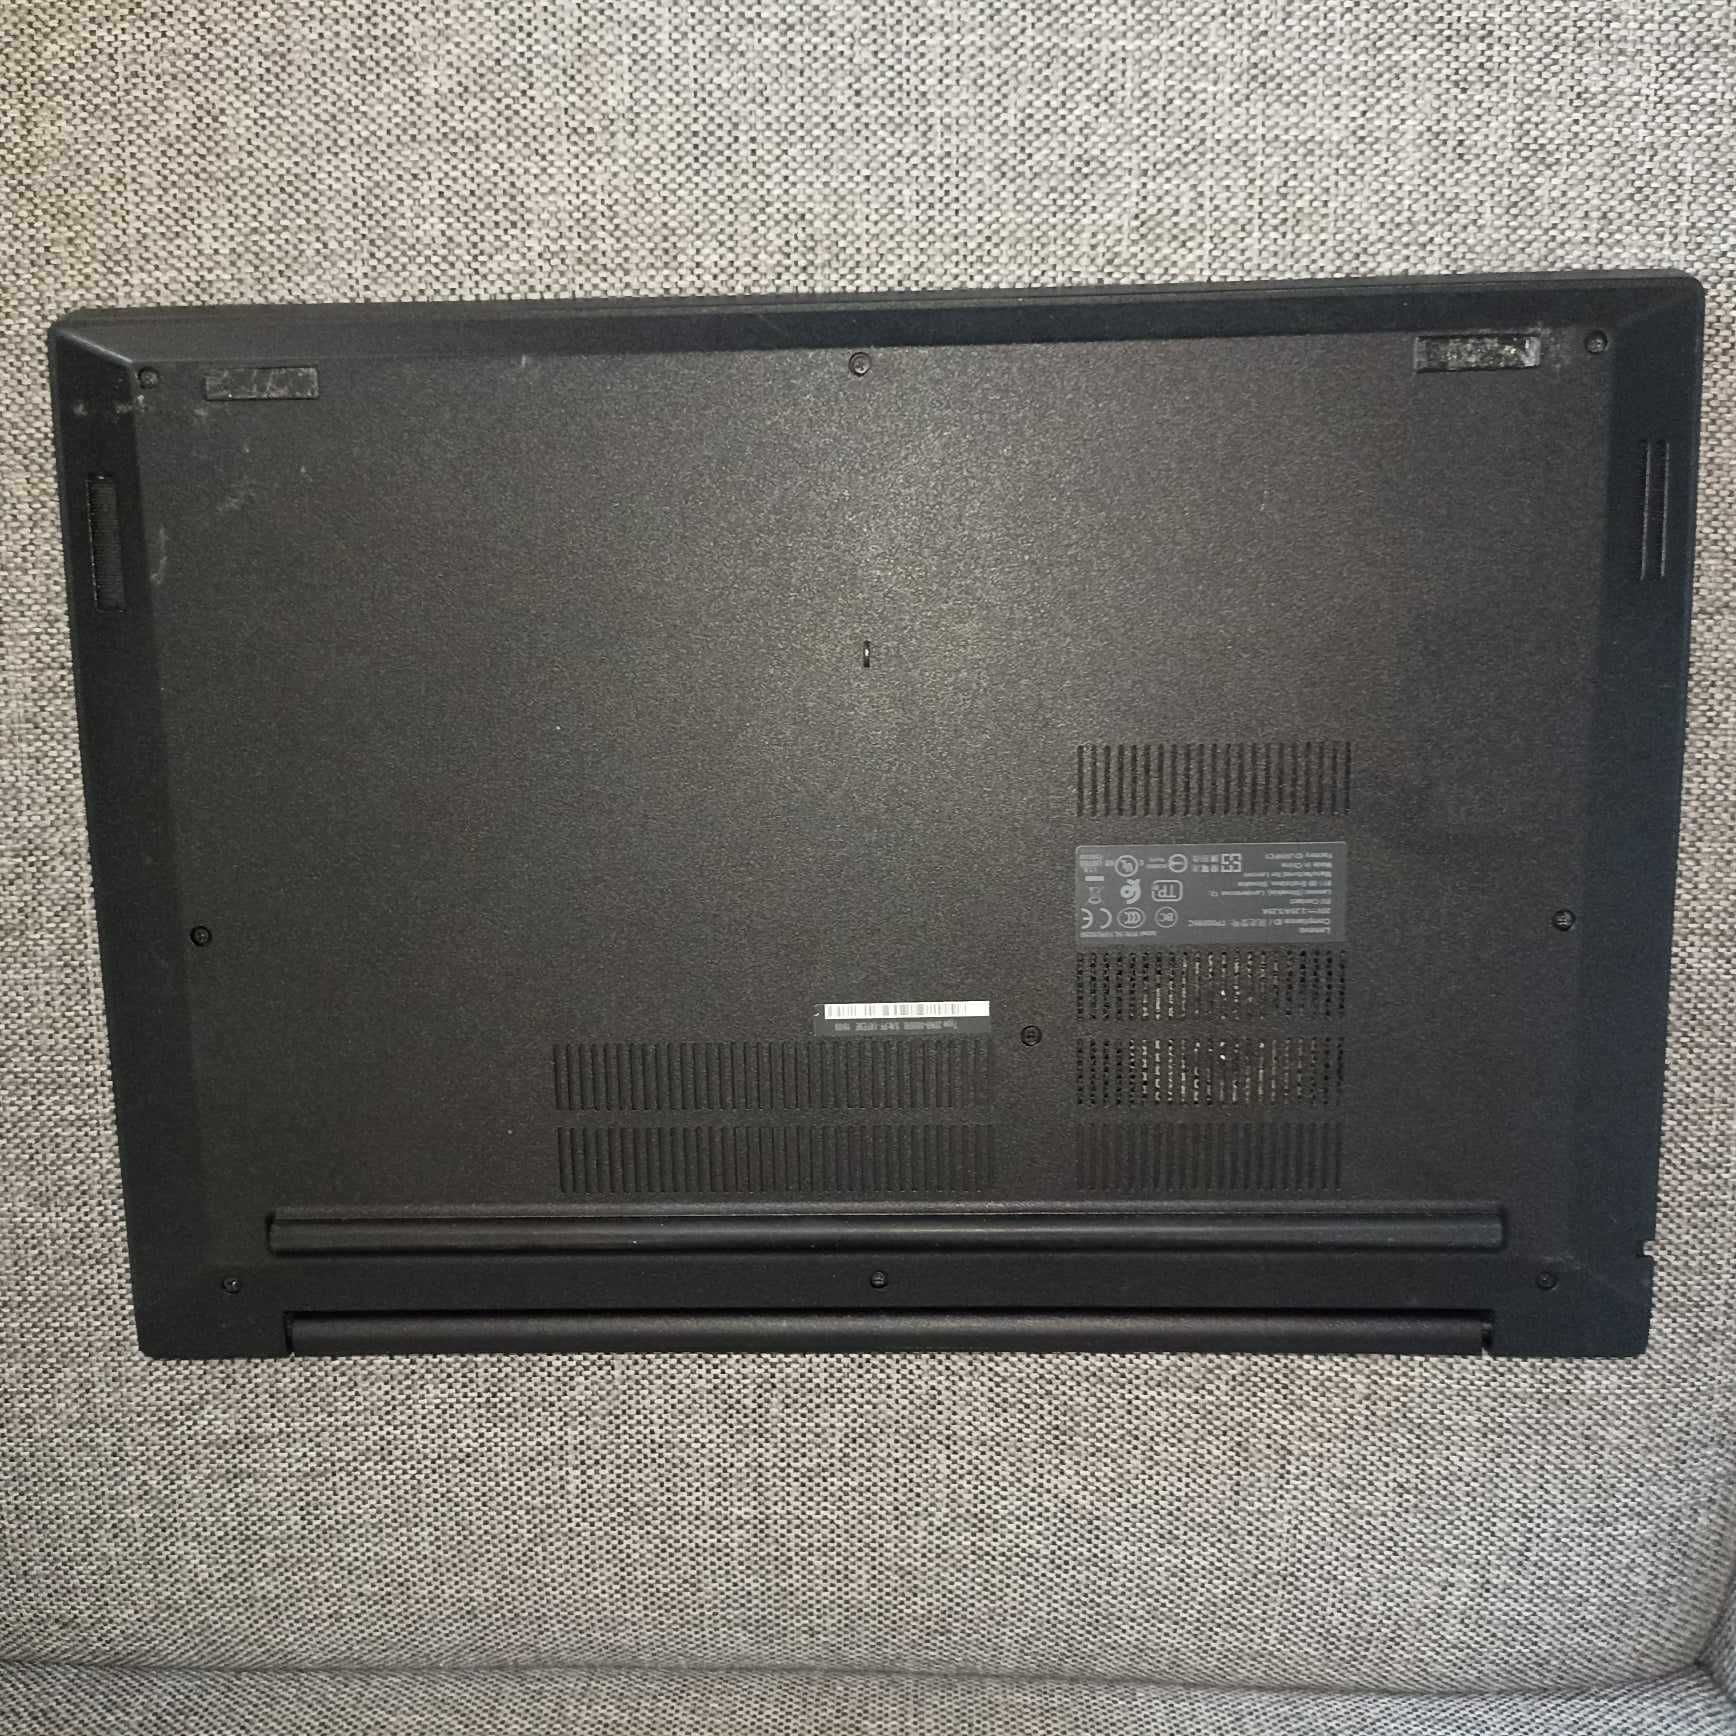 Lenovo Thinkpad E590, in cutie, I5-8265U, 16Gb, ssd256Gb. Impecabila